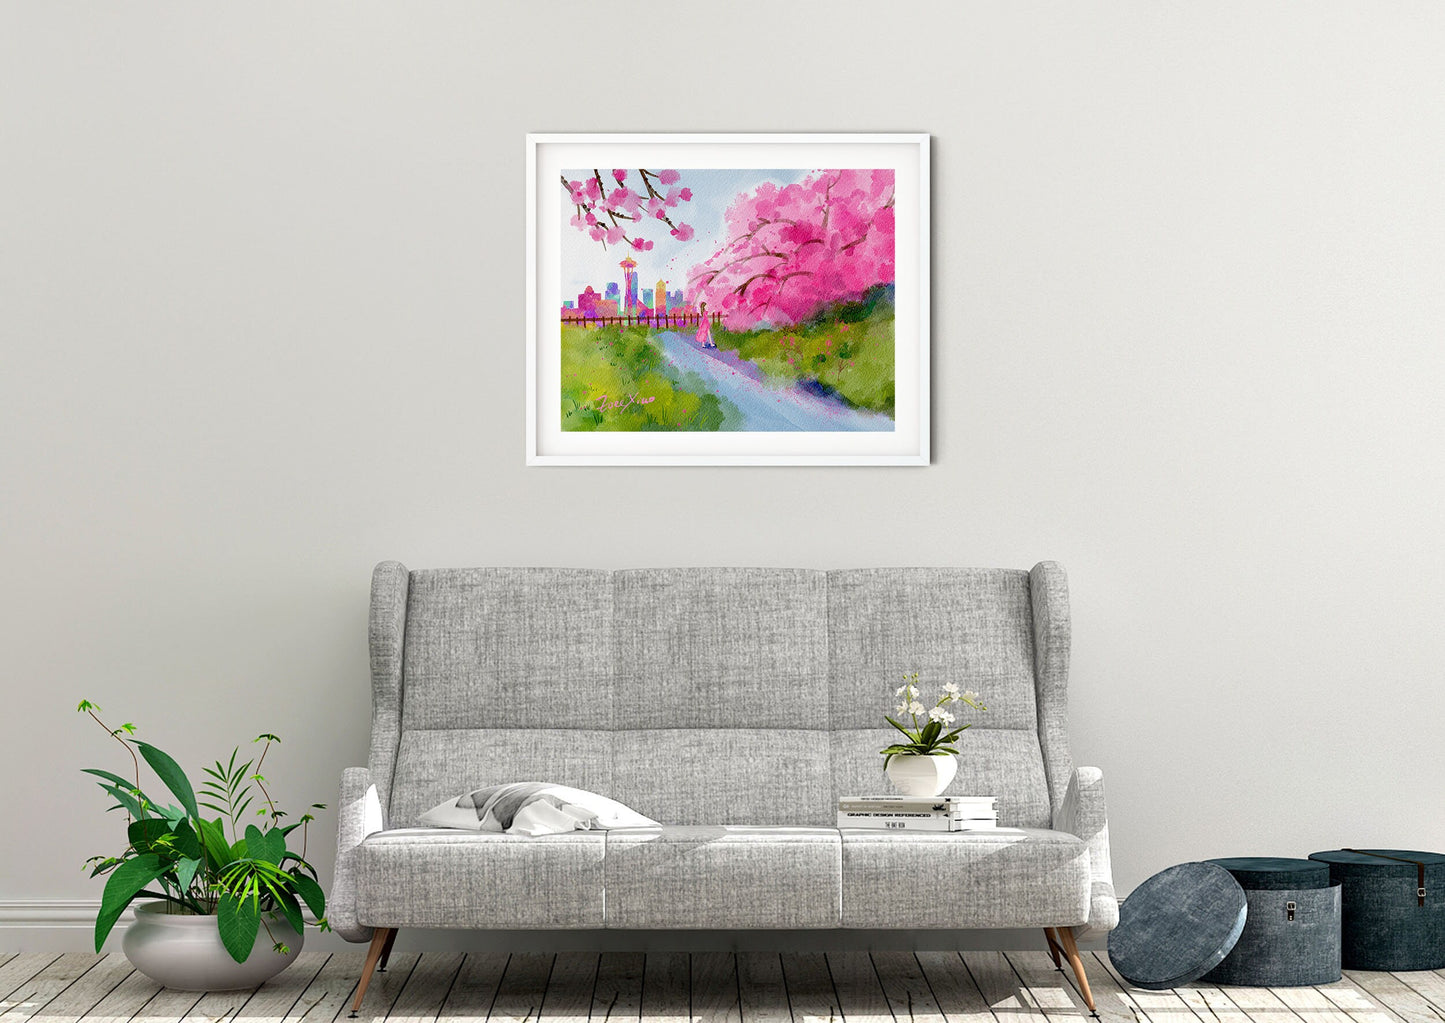 Seattle art print, Kerry park cherry blossom